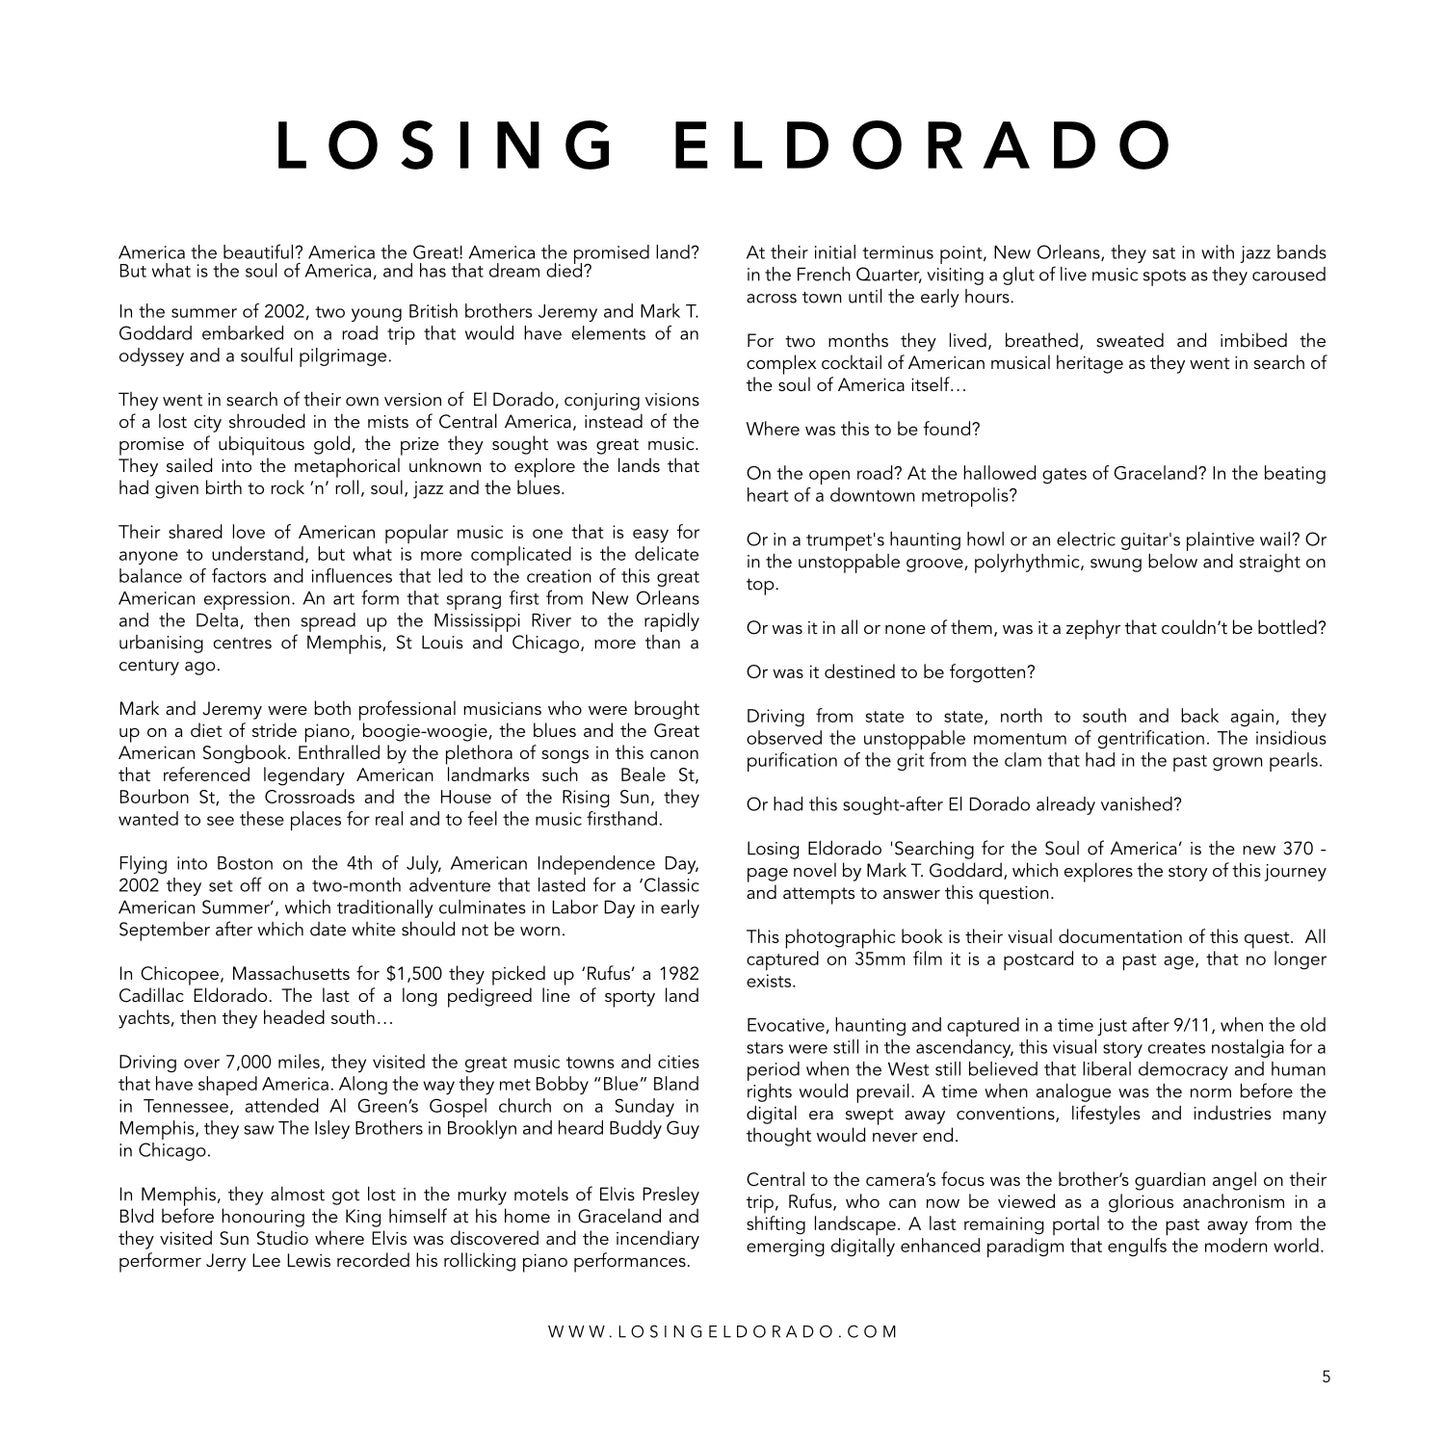 Losing Eldorado - ‘Searching for the Soul of America’